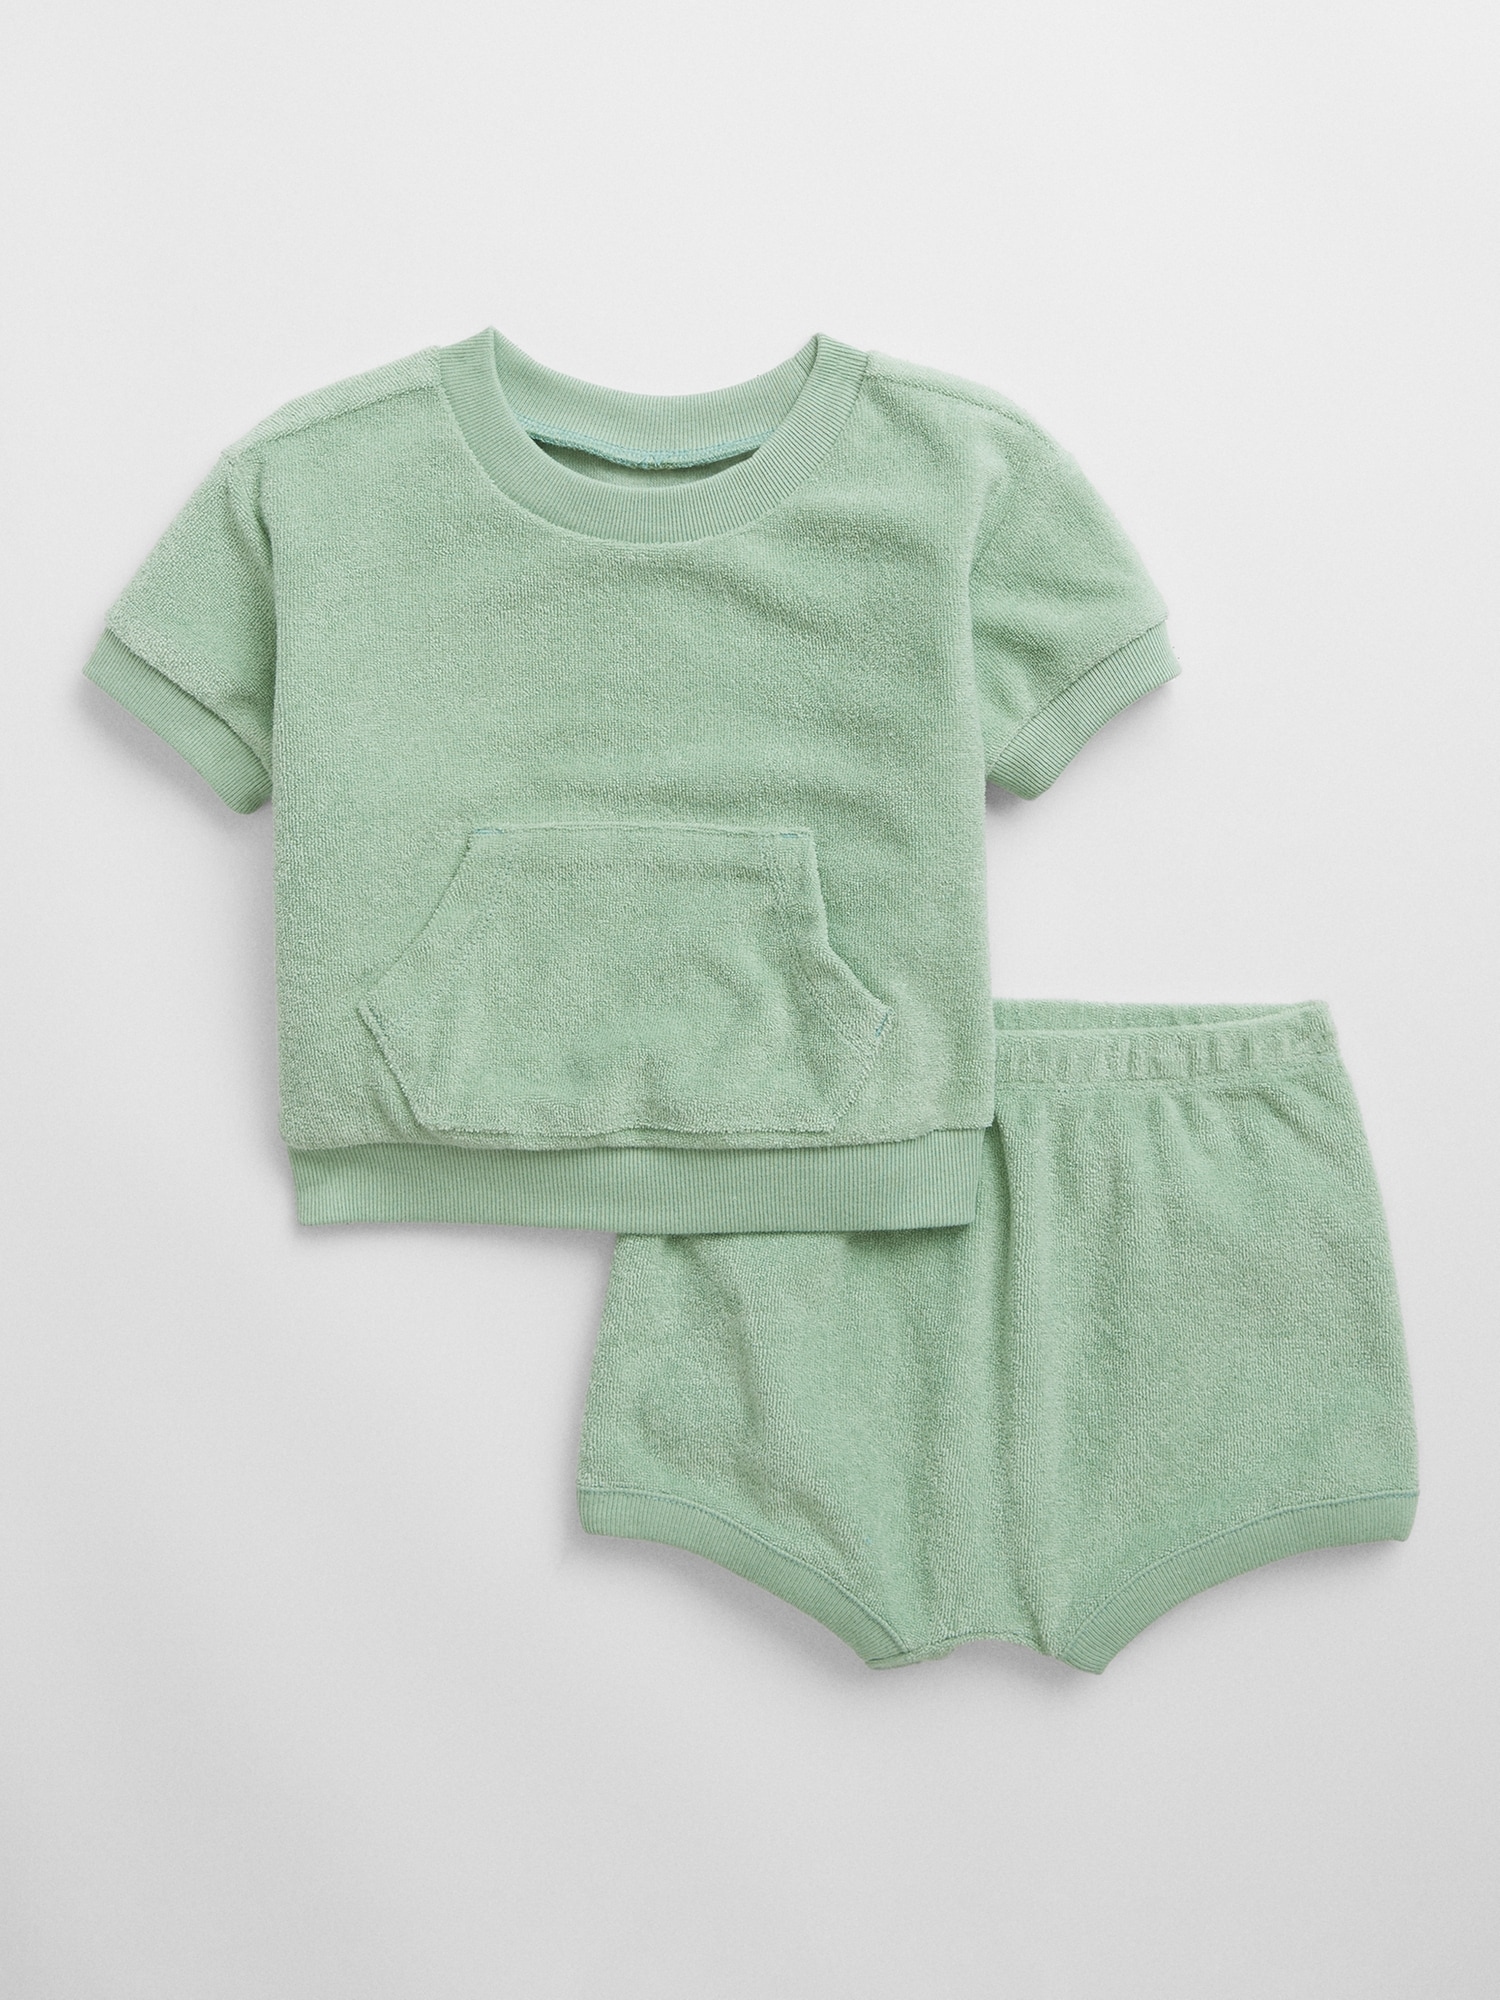 Baby Kanga Two-Piece Outfit Set